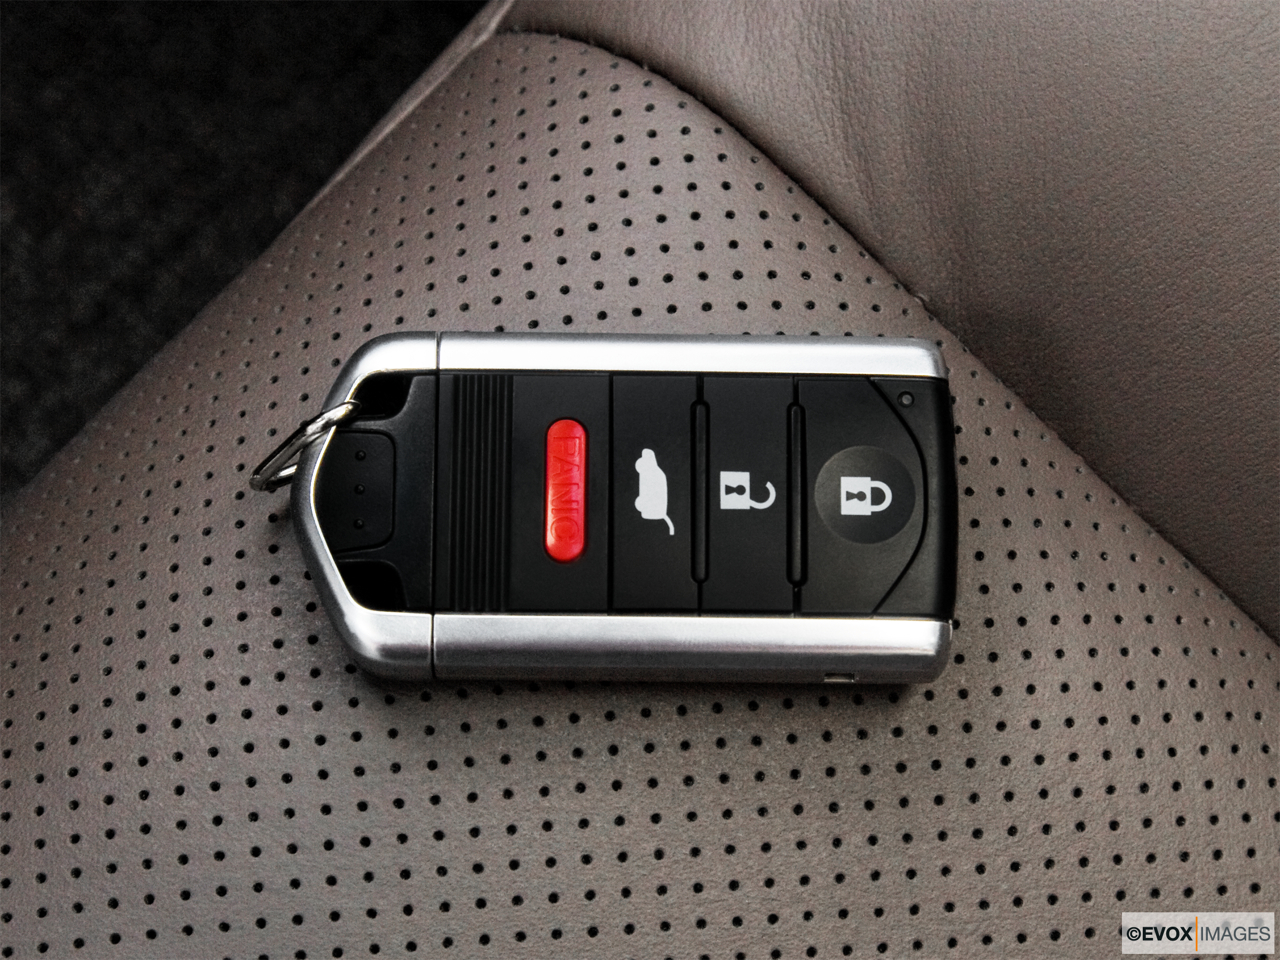 2010 Acura ZDX ZDX Technology Key fob on driver's seat. 